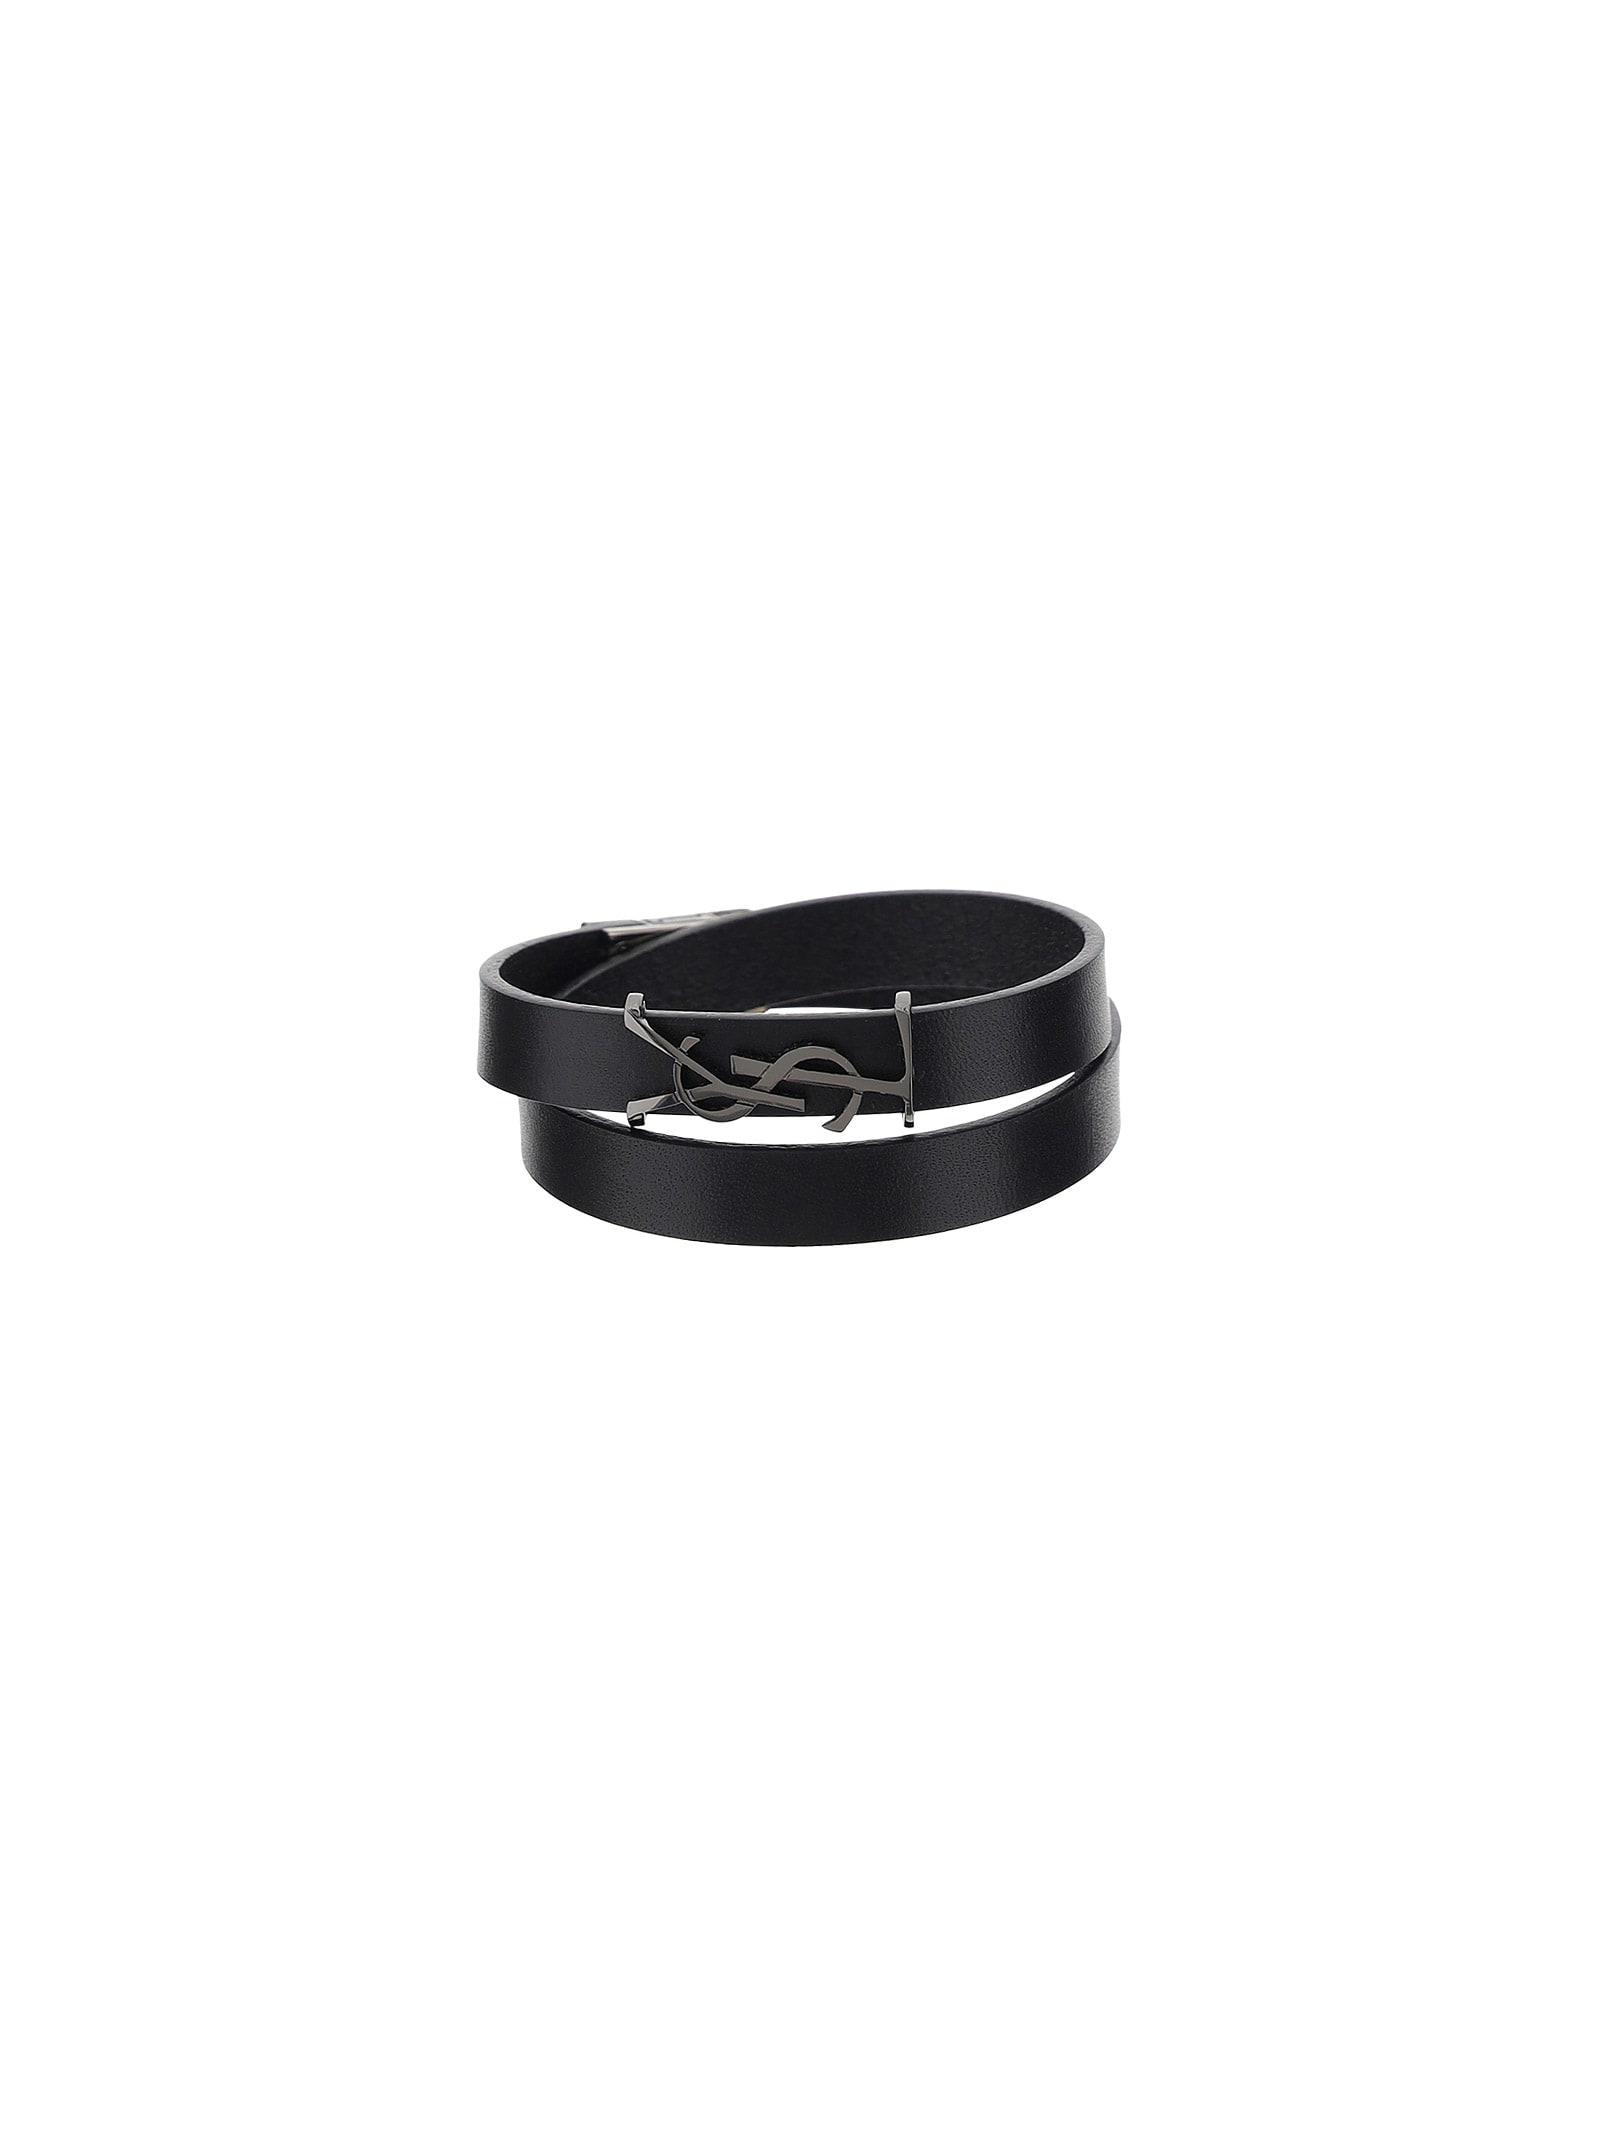 Saint Laurent Leather Ysl Bracelet in Nero Black Womens Mens Jewellery Mens Bracelets - Save 62% 